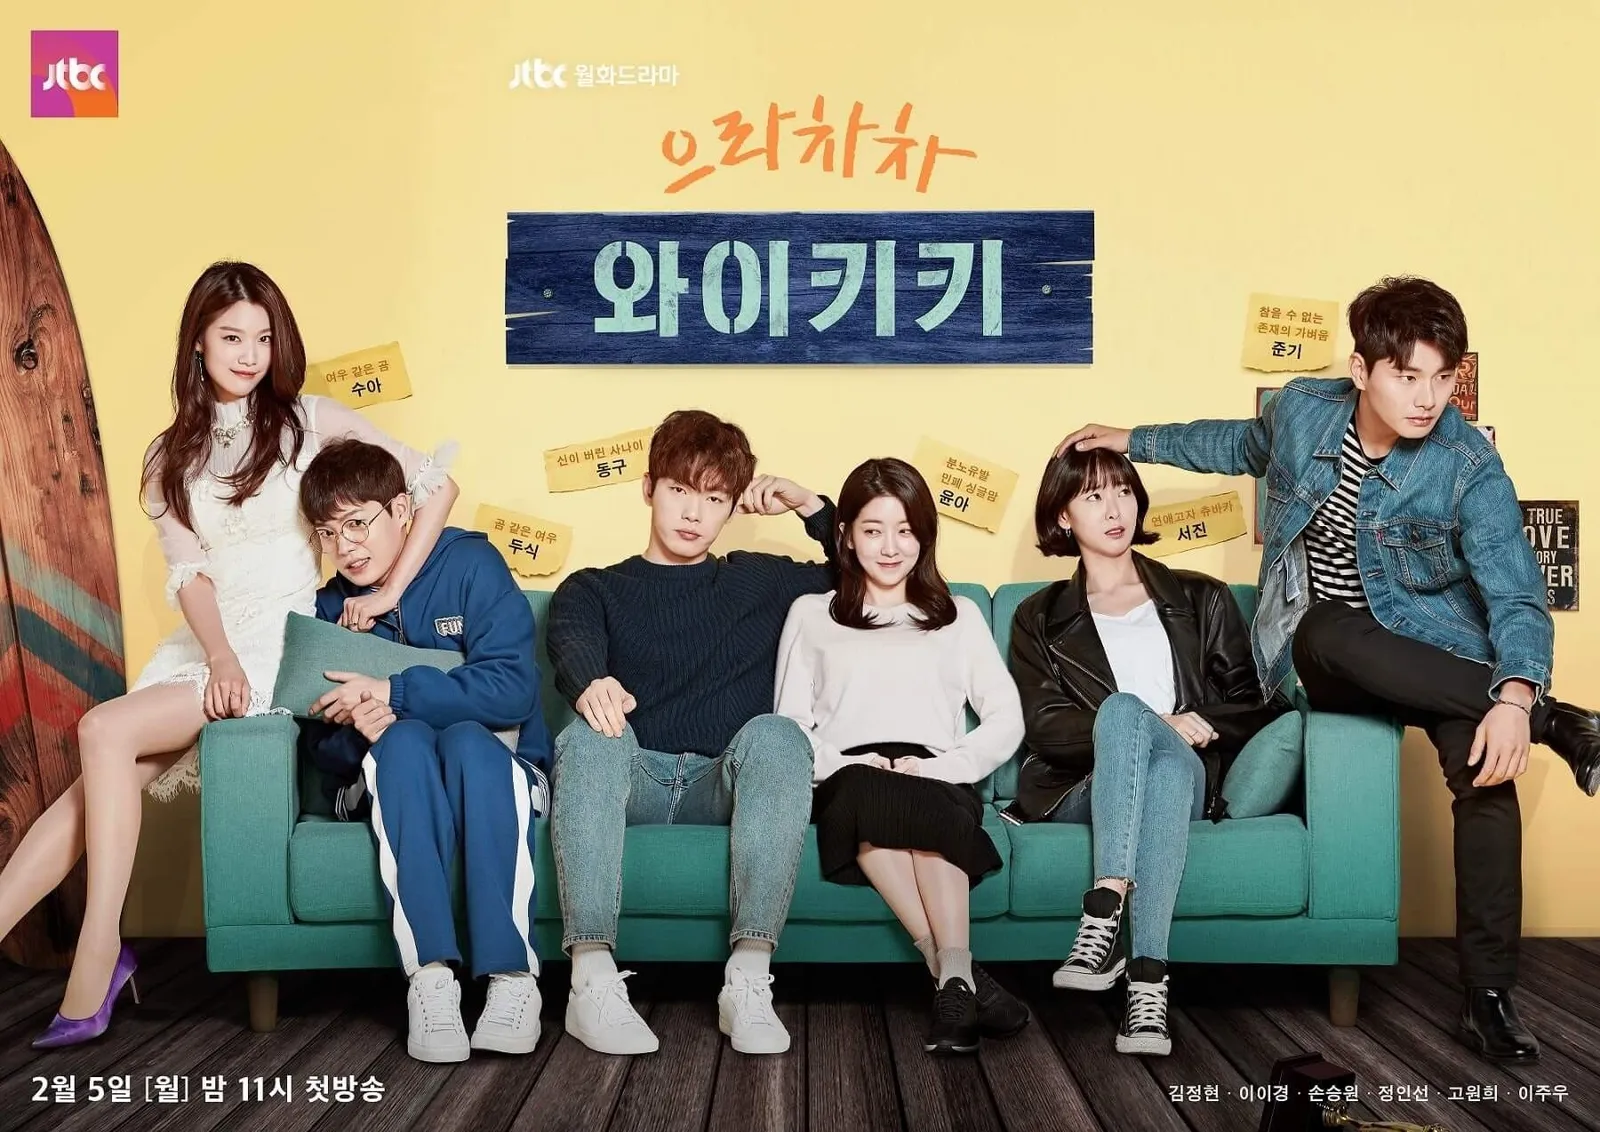 Dijamin Ngakak, 9 Drama Korea Komedi Ini Wajib Kamu Tonton